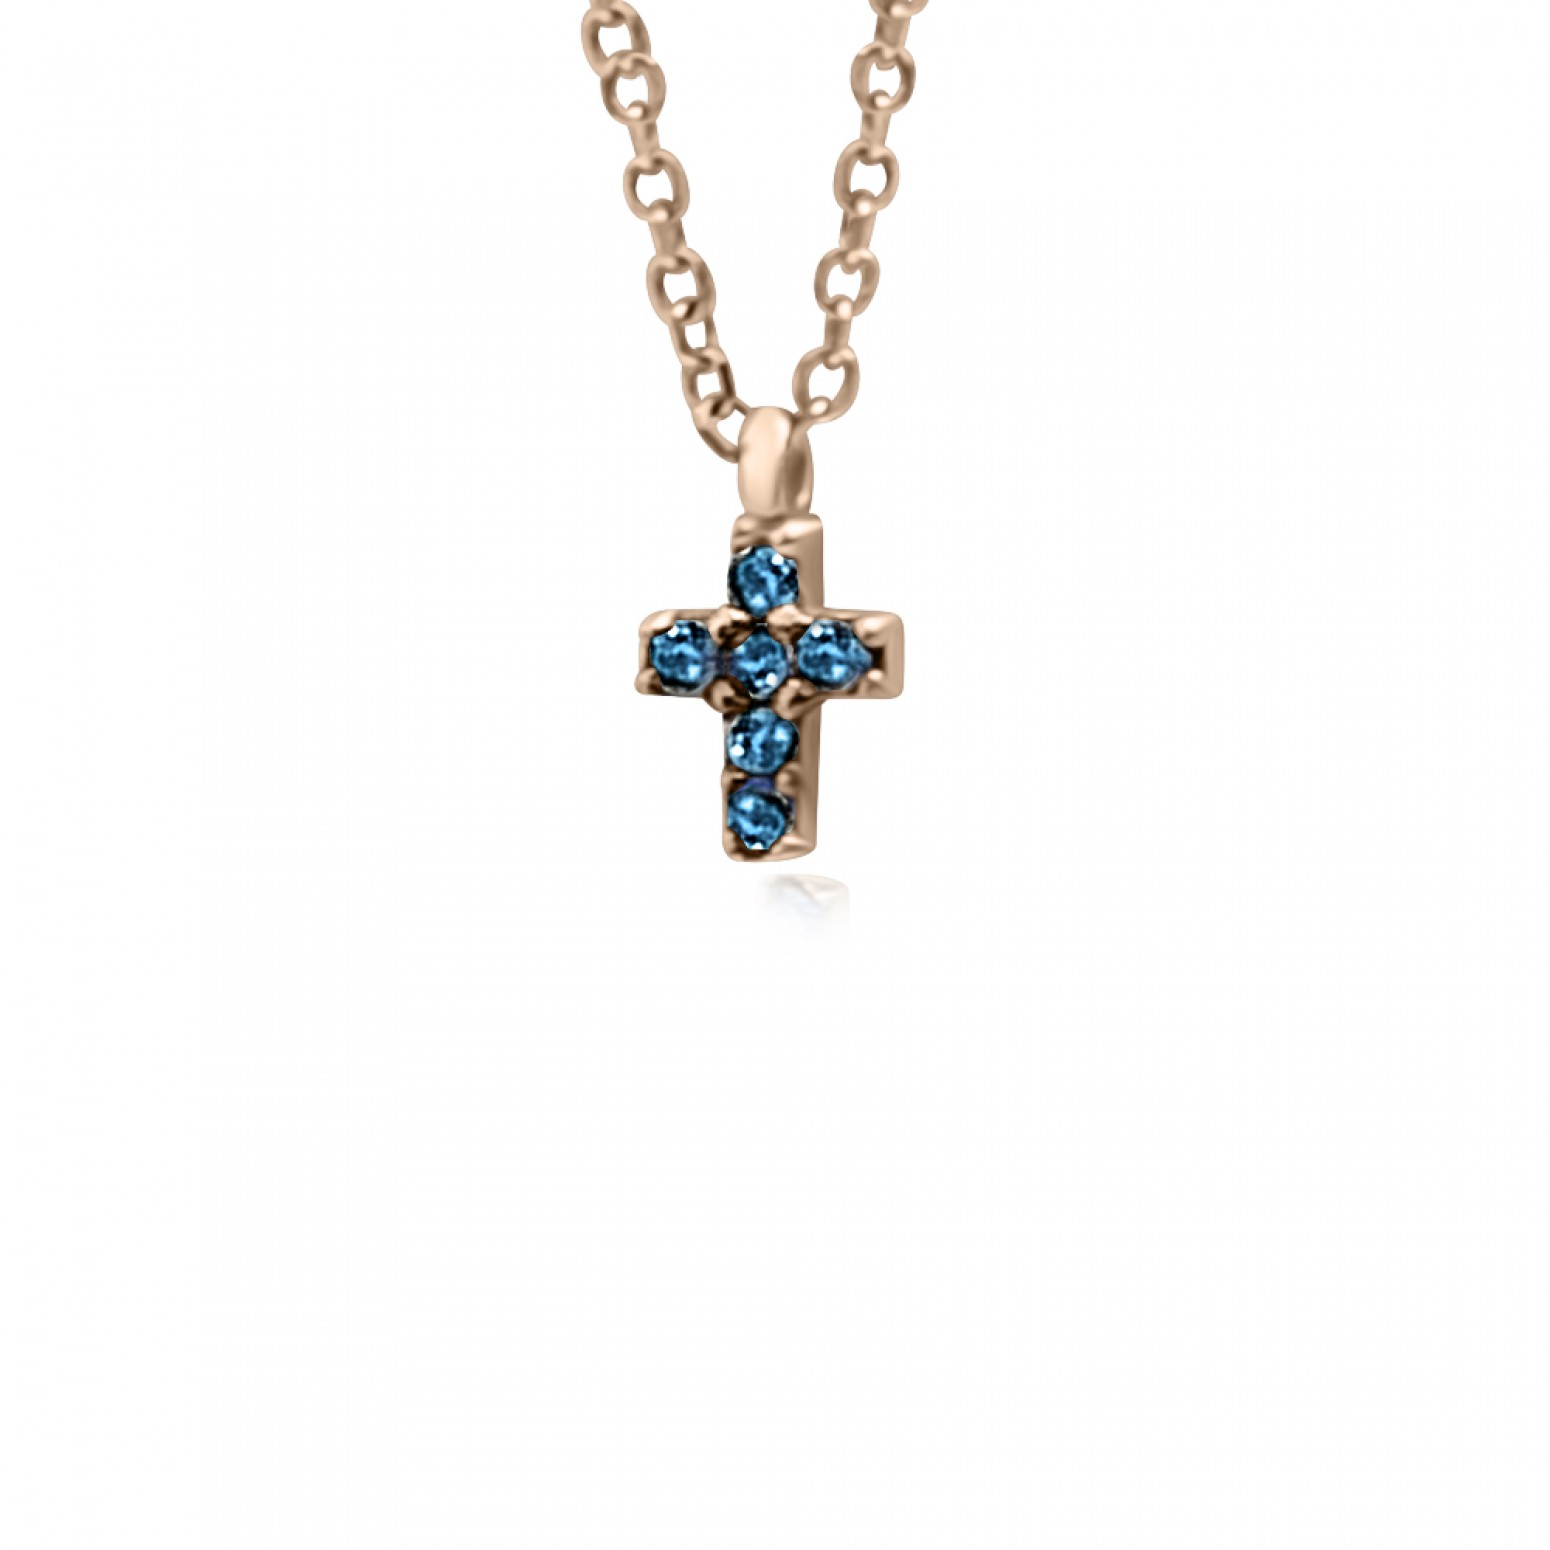 Cross necklace, Κ14 pink gold with blue zircon, ko3110 NECKLACES Κοσμηματα - chrilia.gr